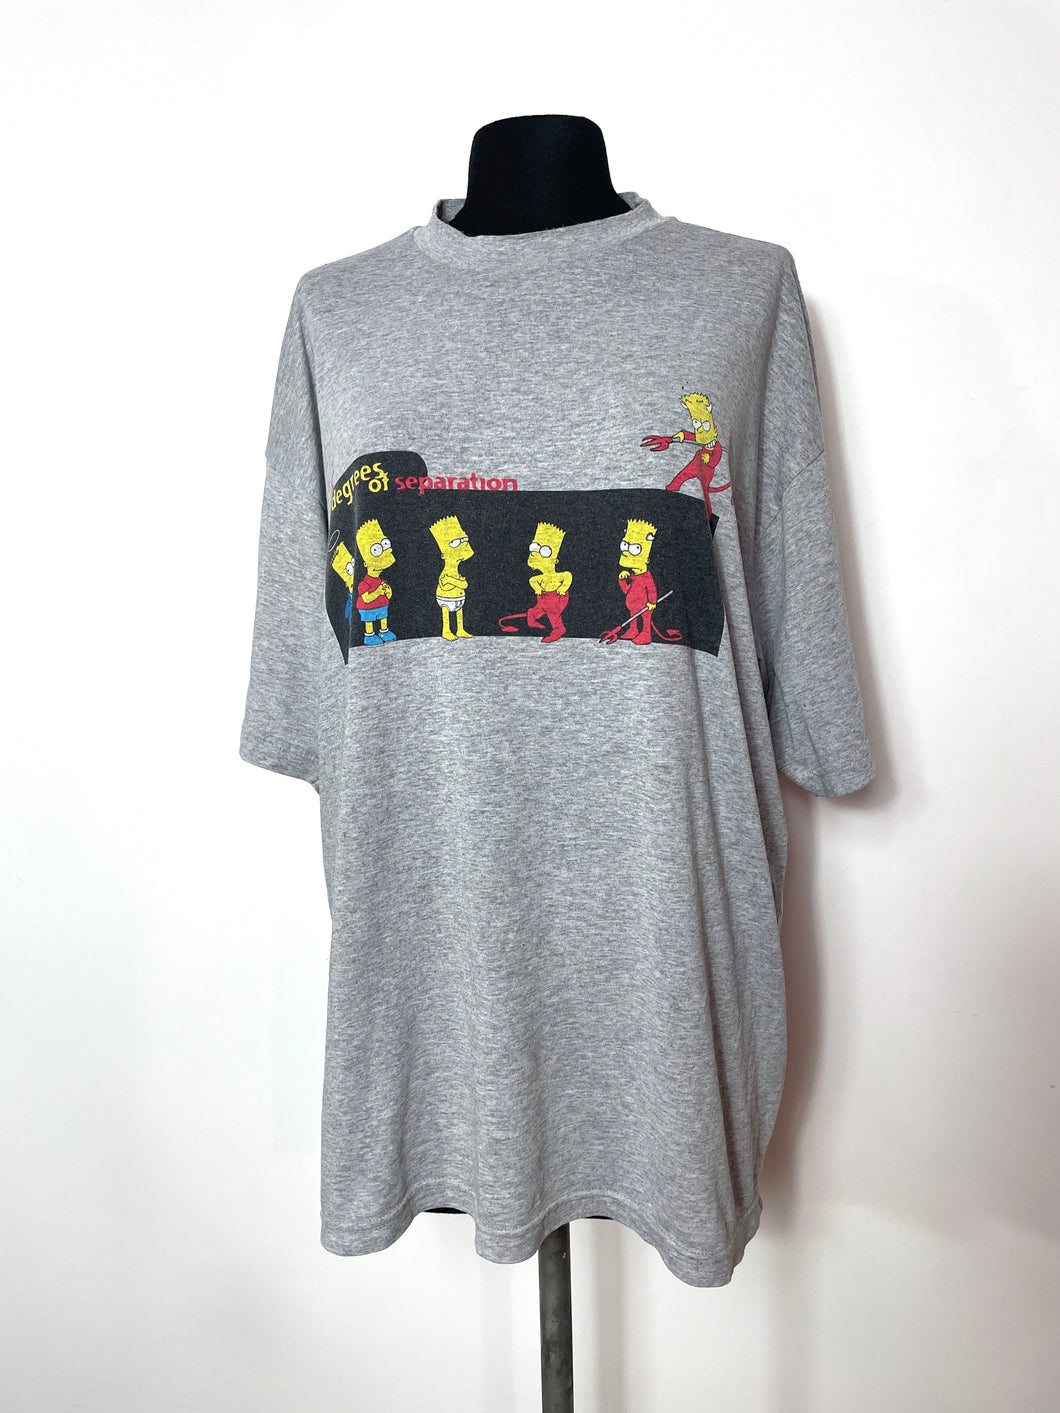 T-shirt Simpsons vintage 99